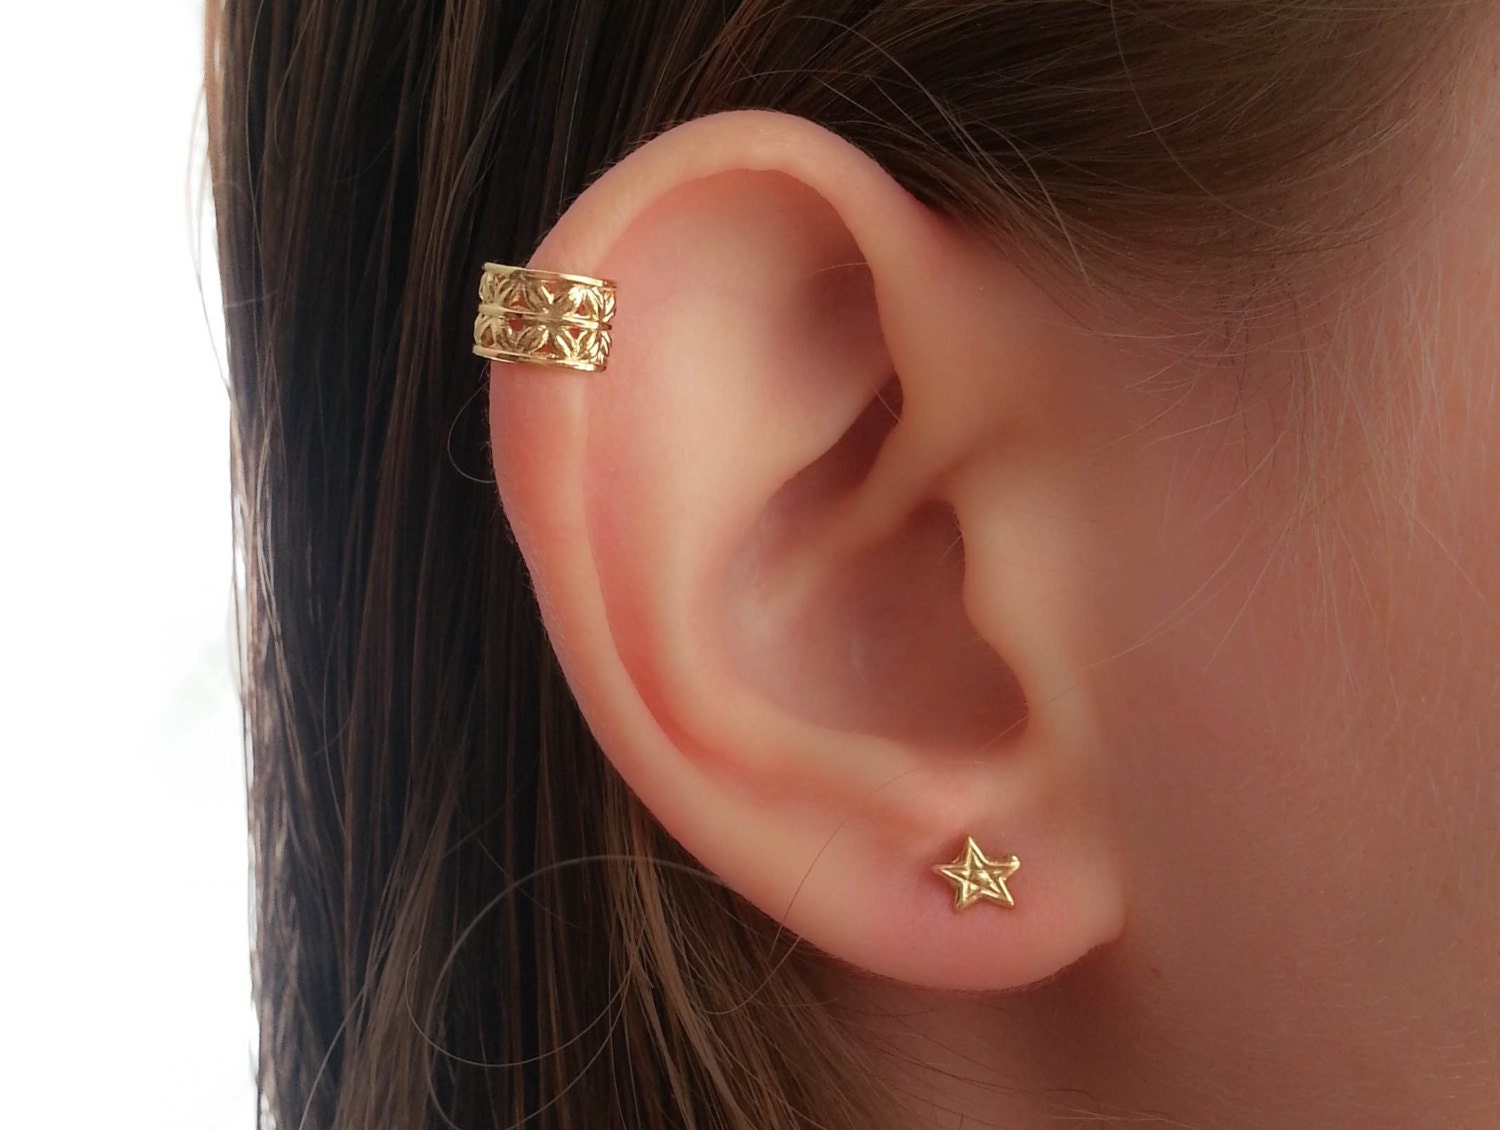 Hesroicy Men Women Rhinestone Cartilage Tragus Bar Helix Upper Ear Earring  Stud Jewelry - Walmart.com